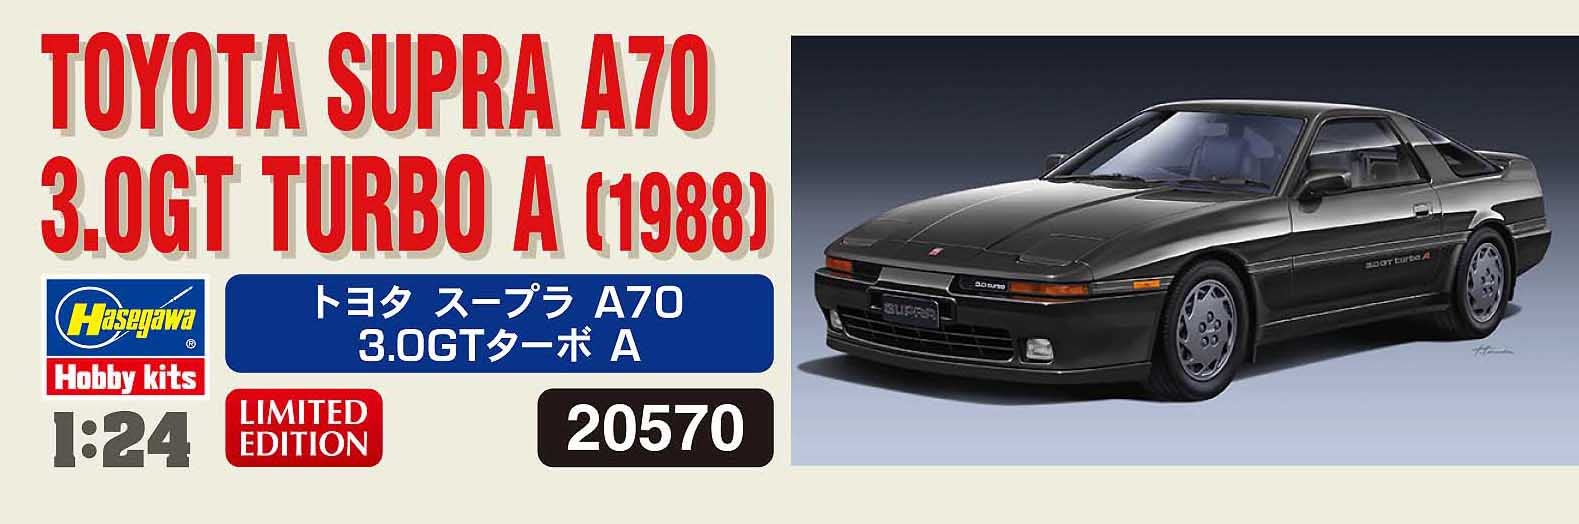 HASEGAWA 1/24 Toyota Supra A70 3.0Gt Turbo Un modèle en plastique